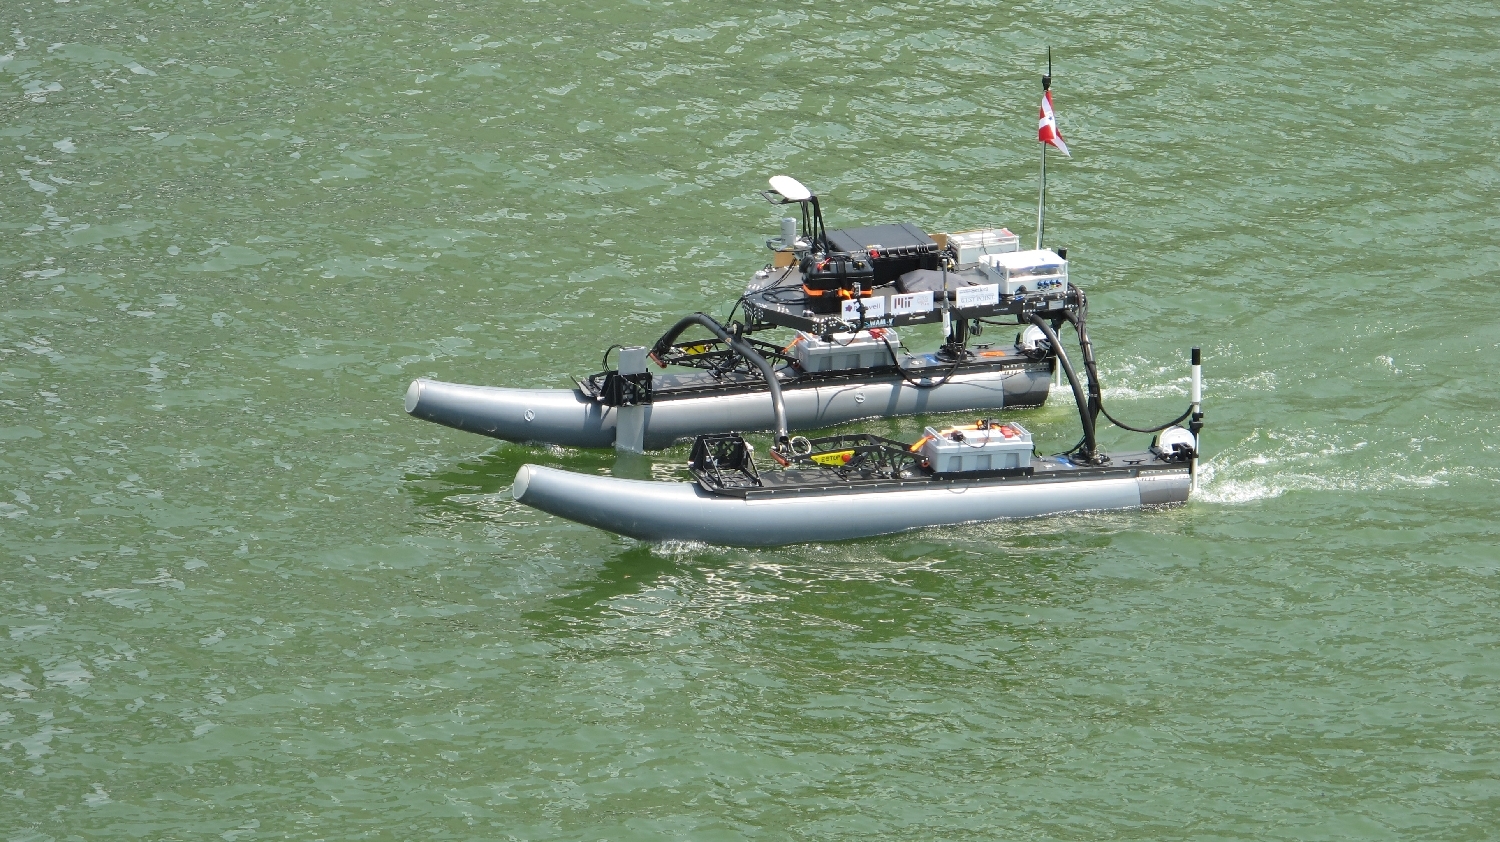 MIT REx vehicle on the water